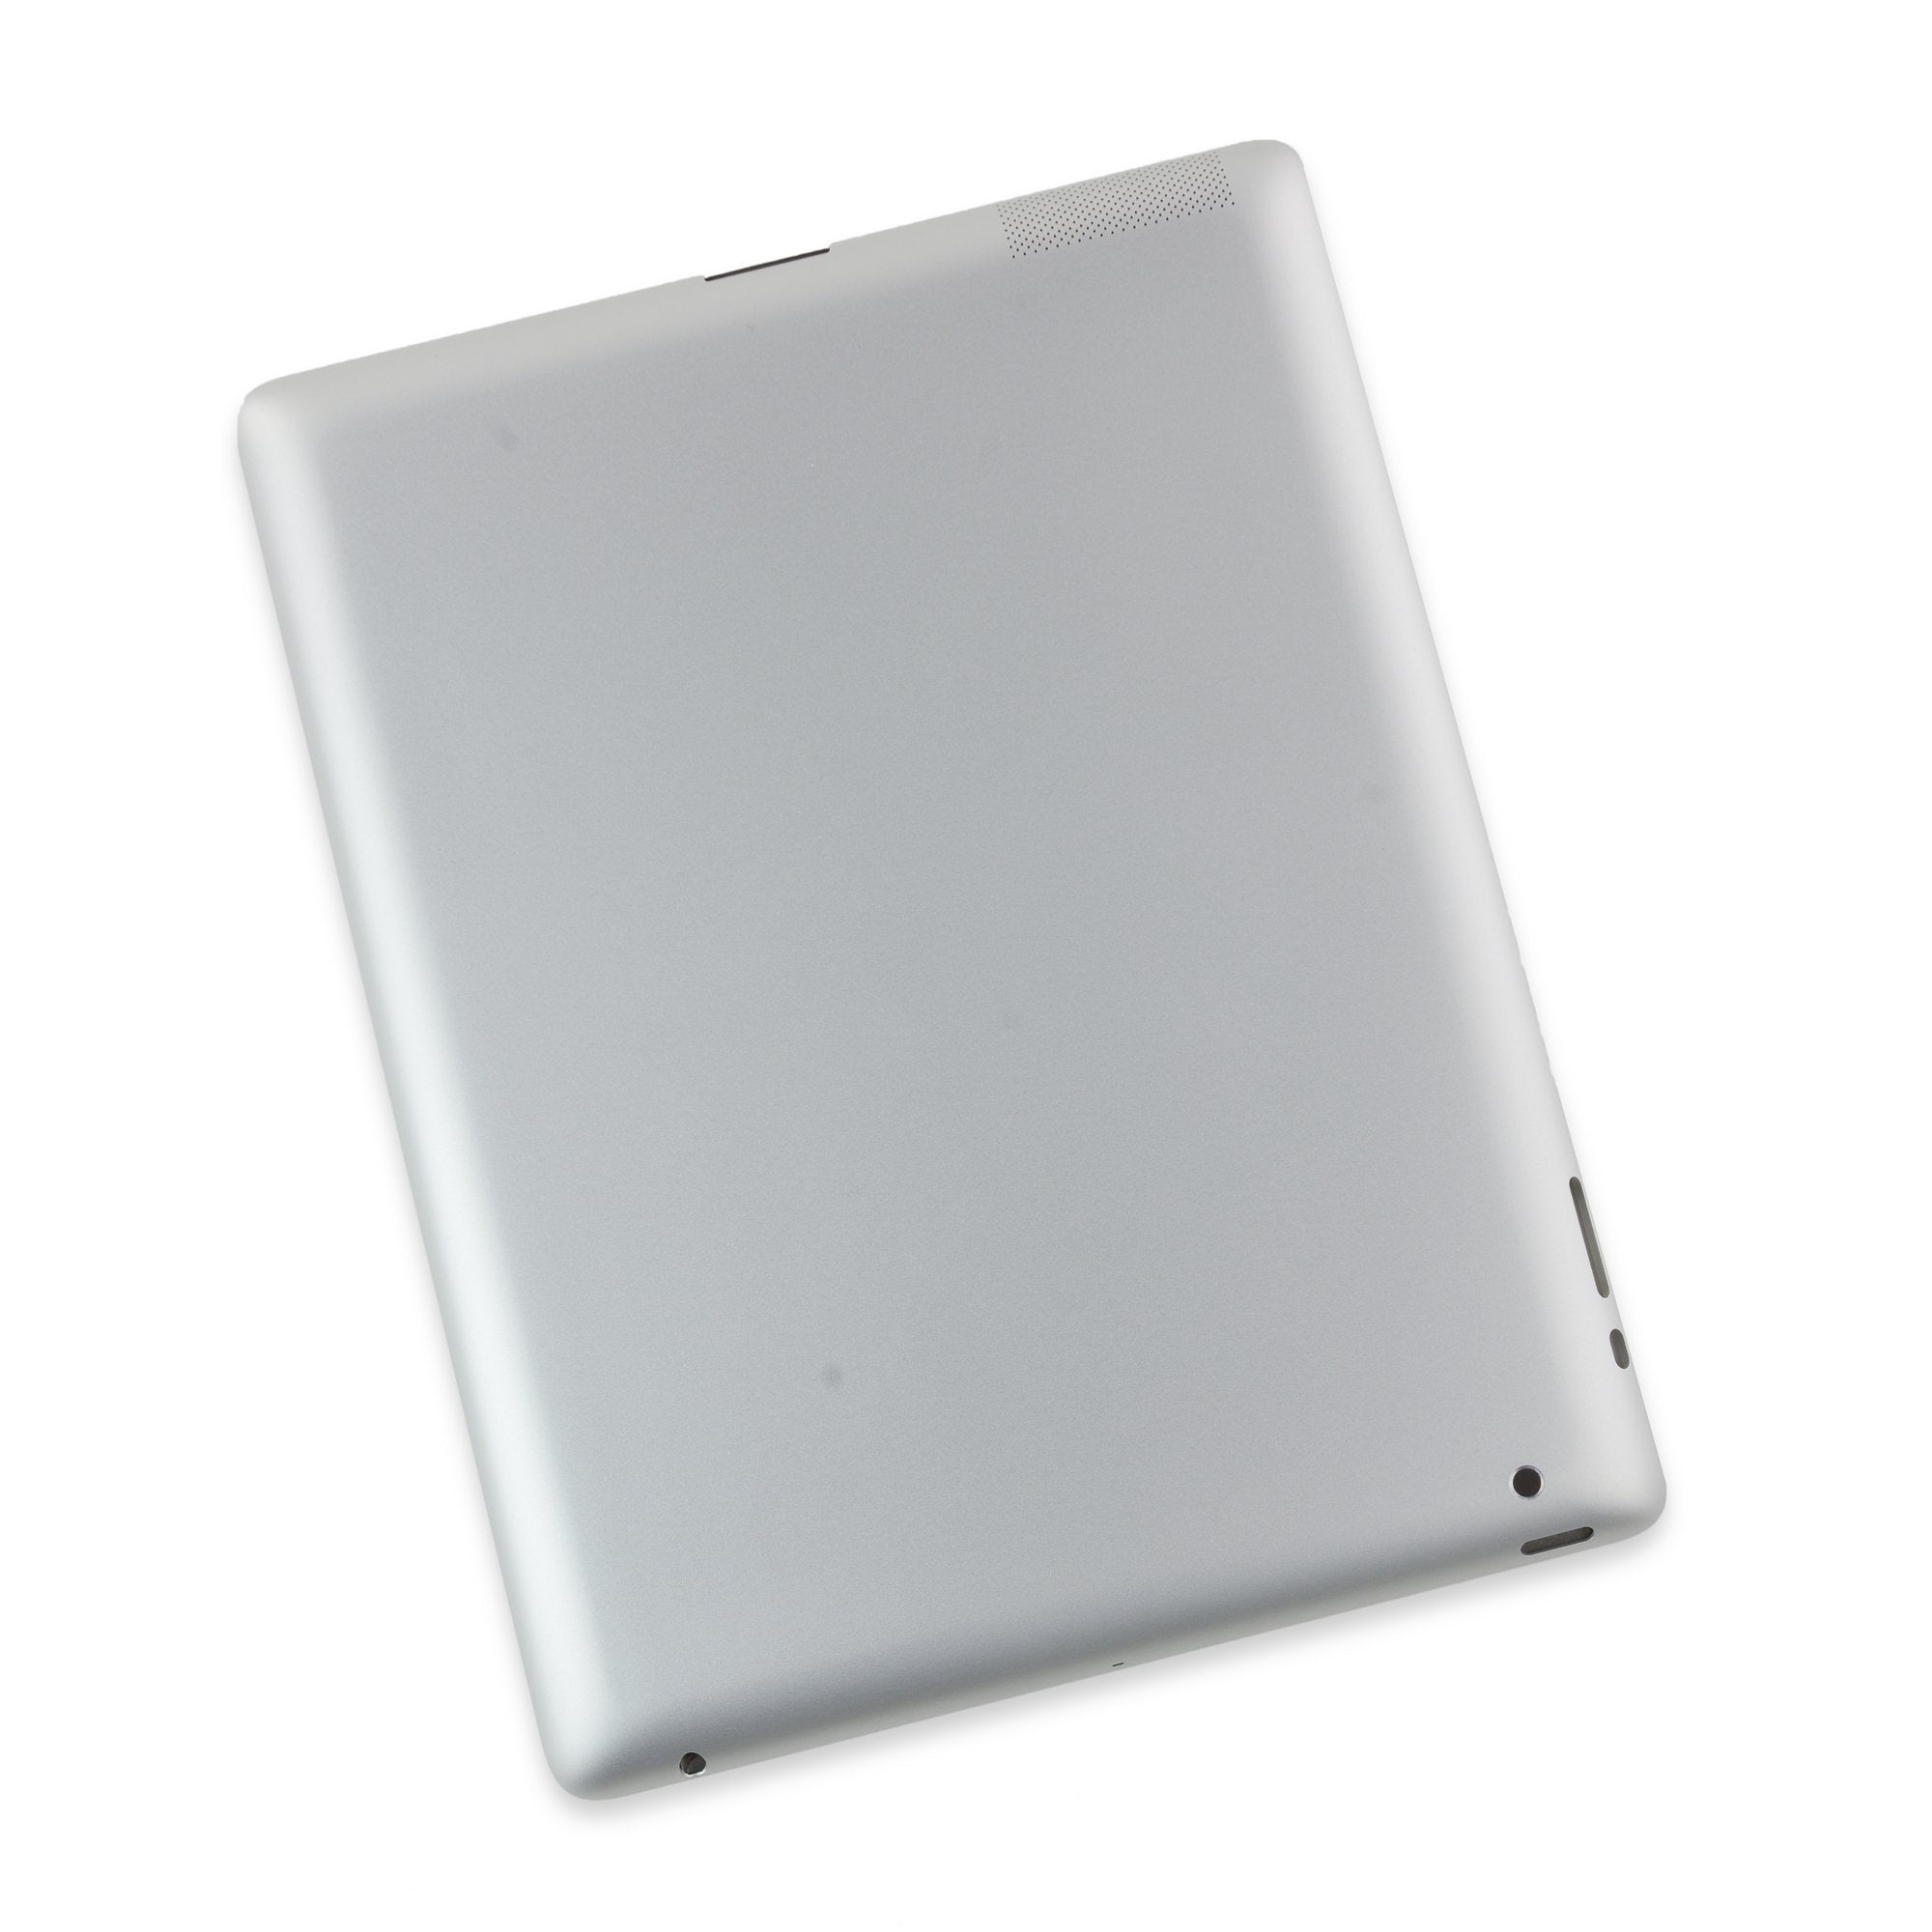 iPad 2 Wi-Fi (EMC 2415) Blank Rear Case